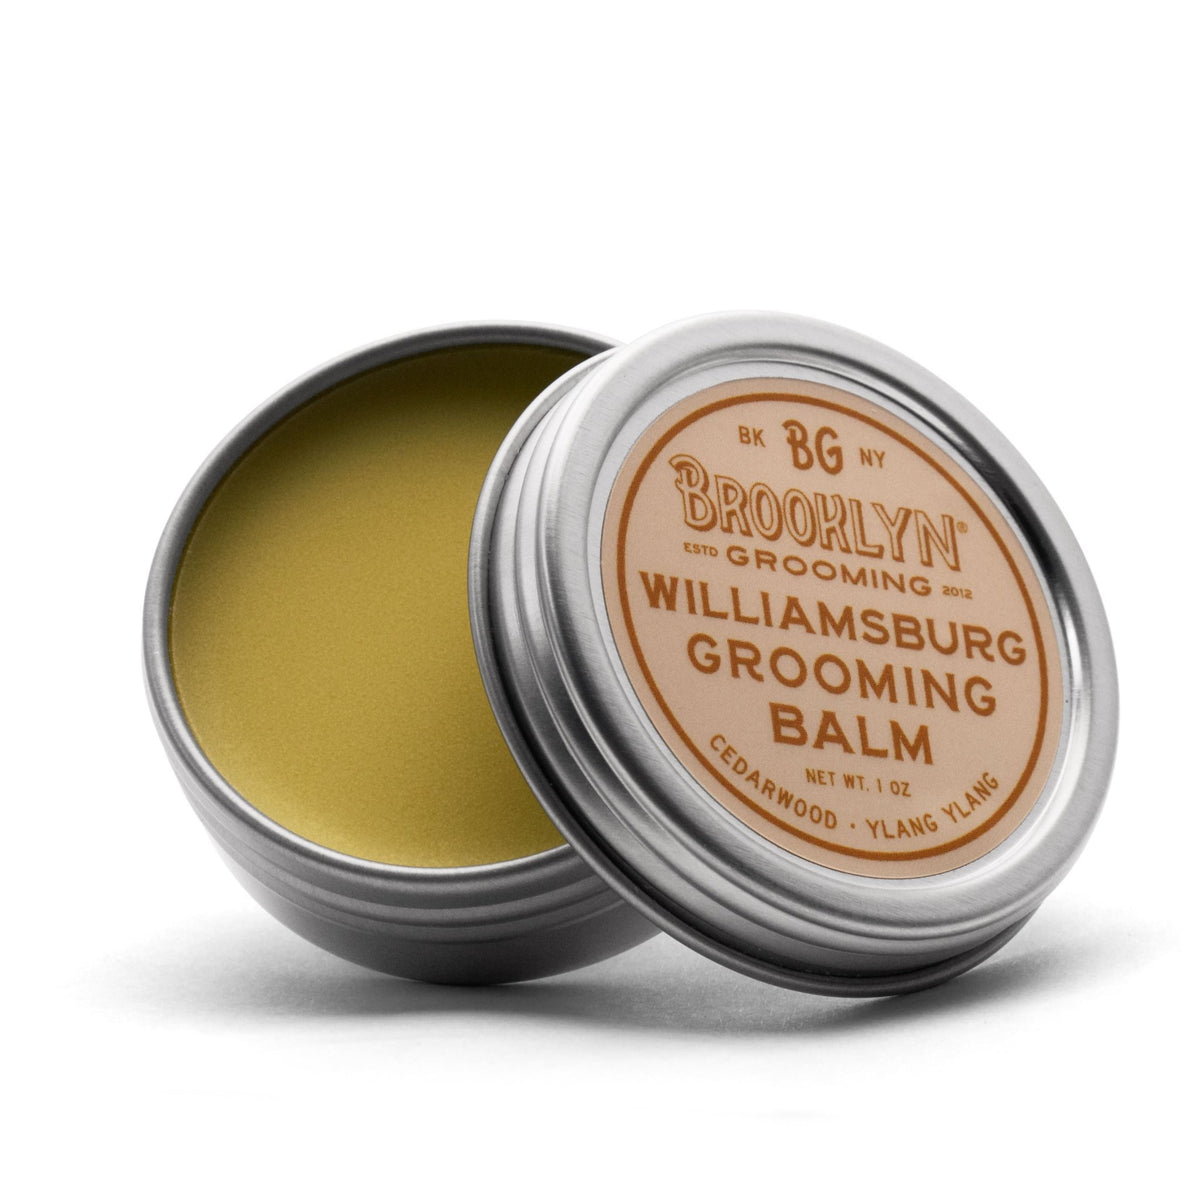 Grooming Balm - 1 oz - Williamsburg - Gift & Gather